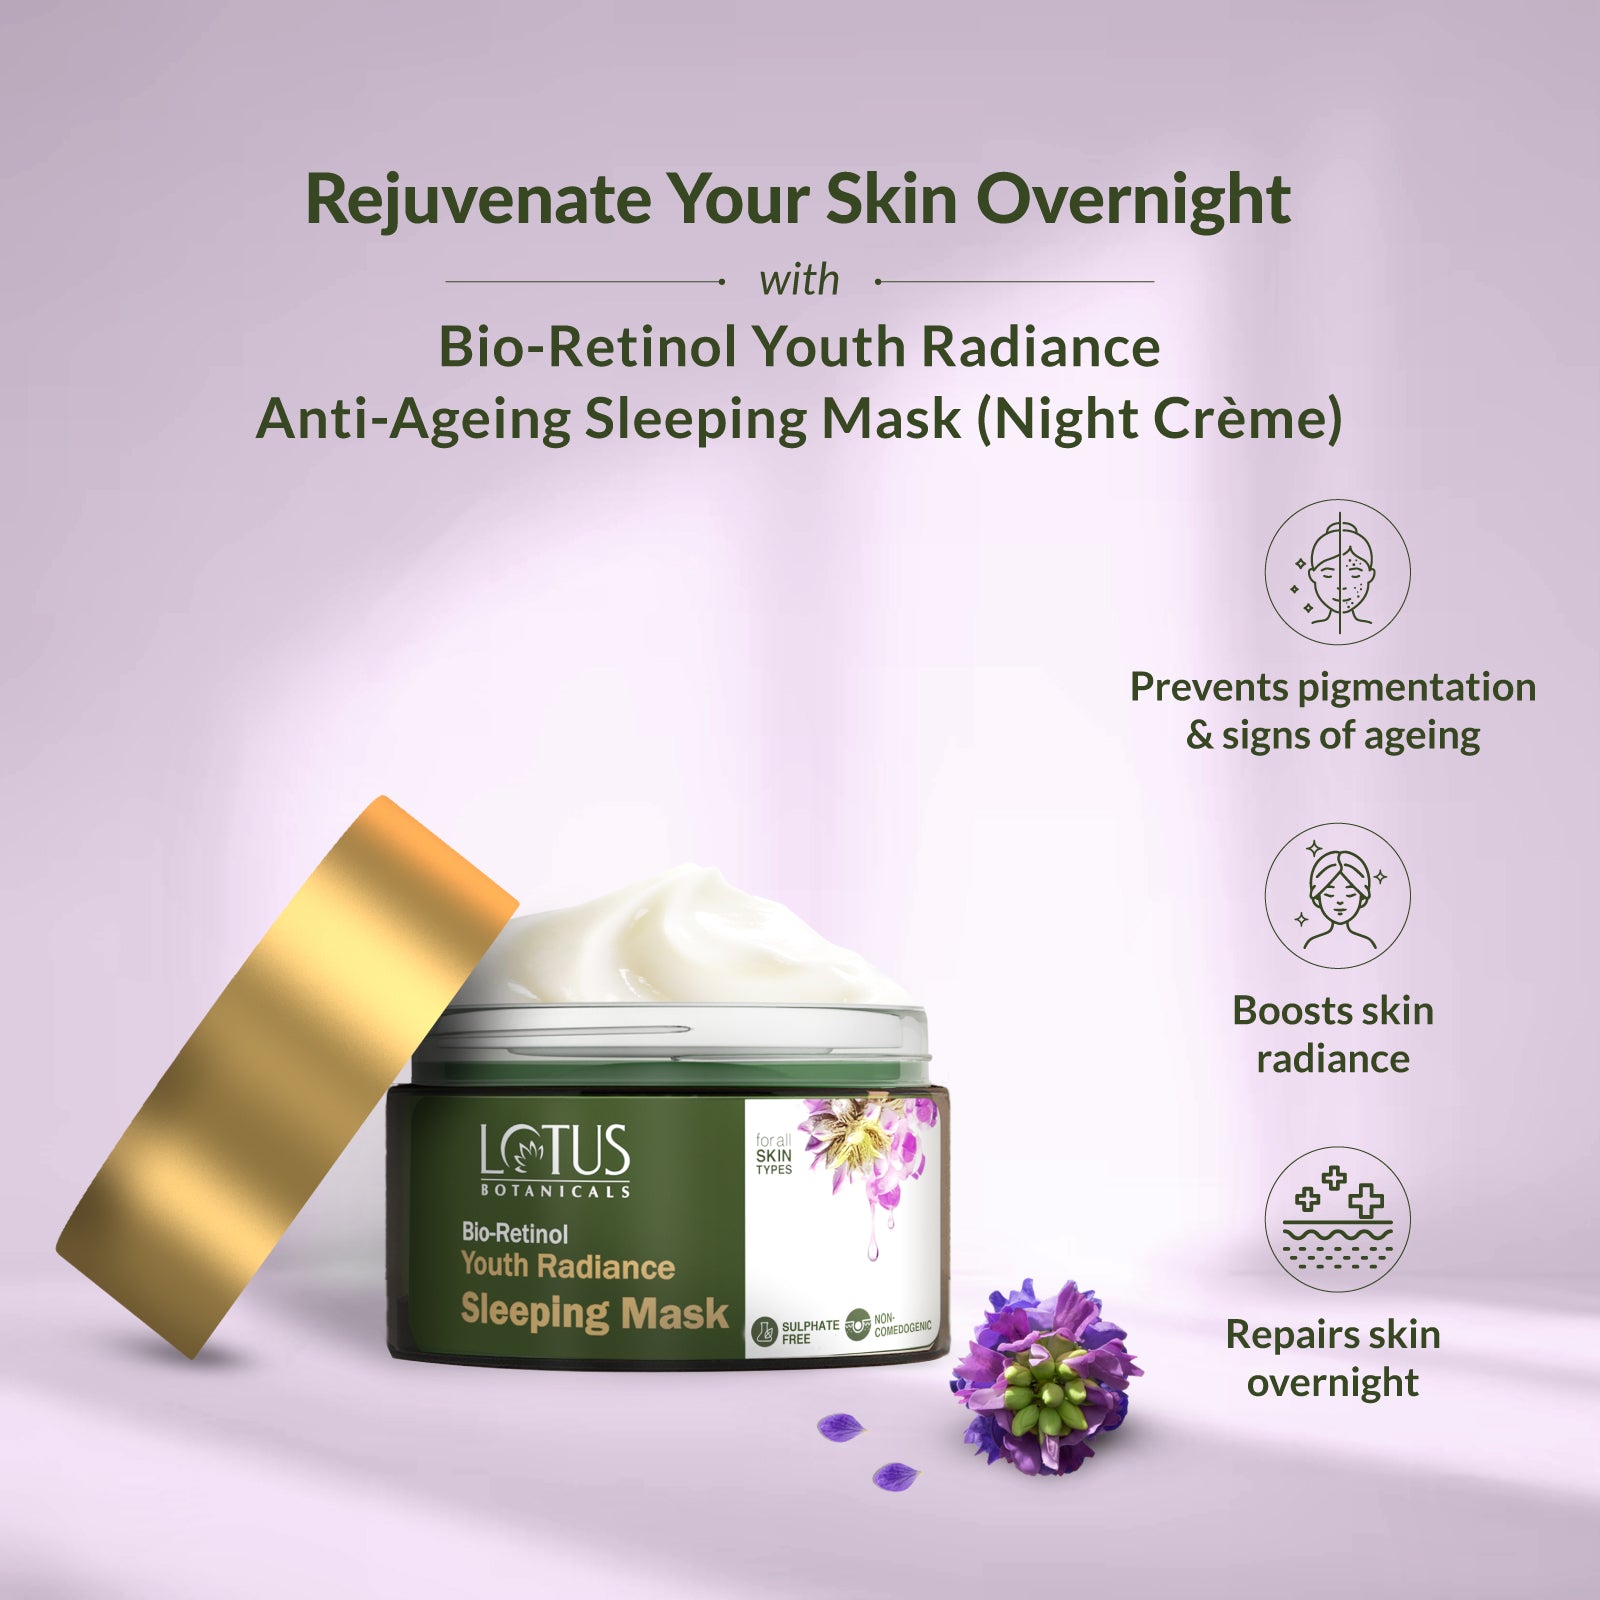 Bio-Retinol Youth Radiance Anti-Ageing Sleeping Mask (Night Cr�me) - Rejuvenating overnight skincare treatment with bio-retinol for youthful and radiant skin